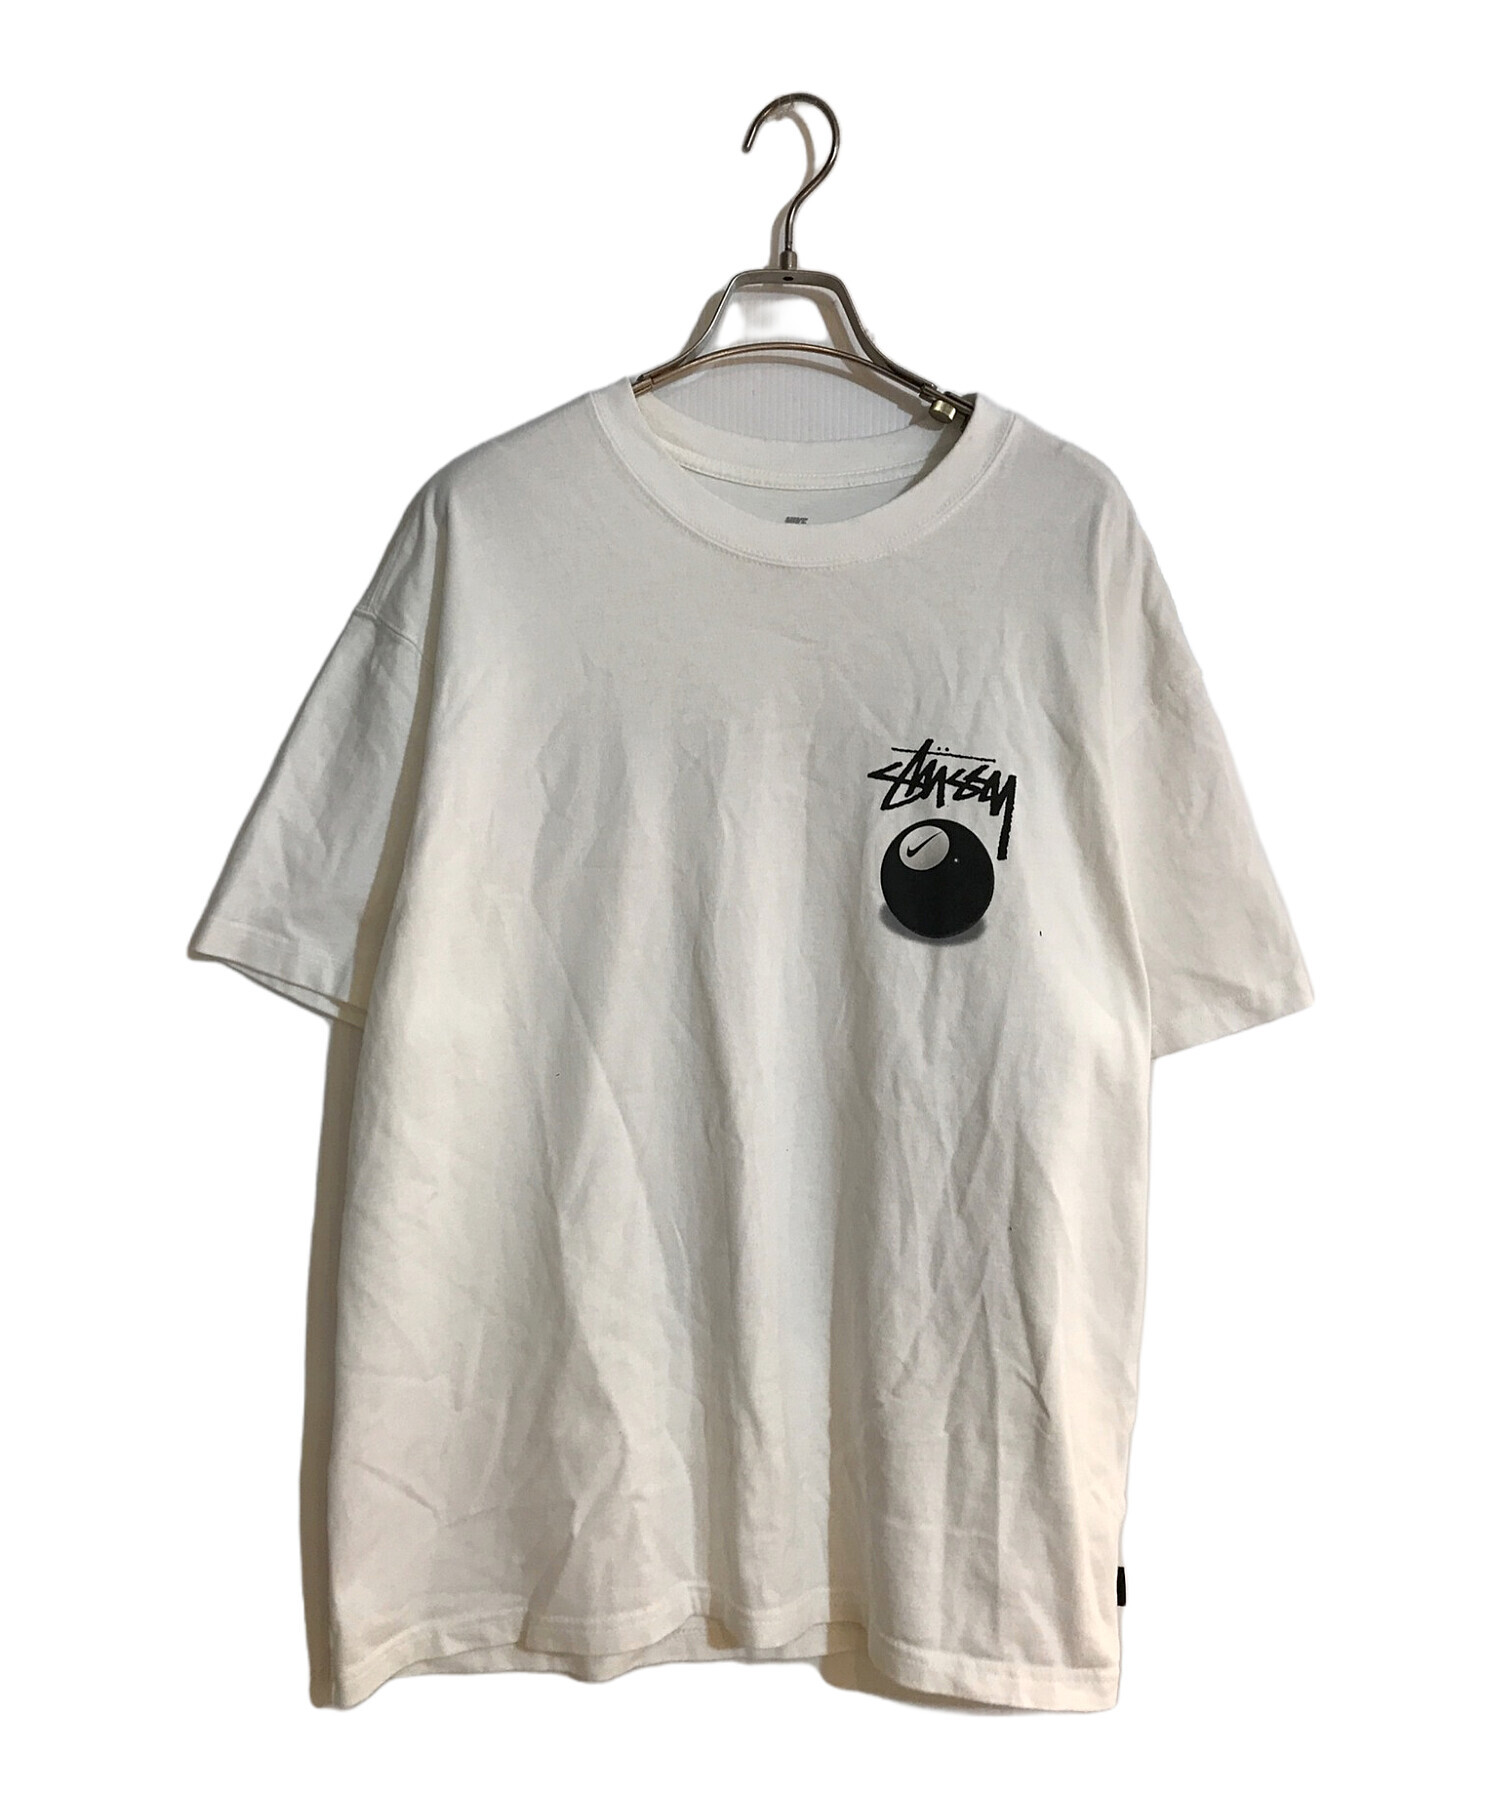 NIKE (ナイキ) stussy (ステューシー) NRG FL SS 8 Ball T-Shirt ホワイト×ブラック サイズ:XL